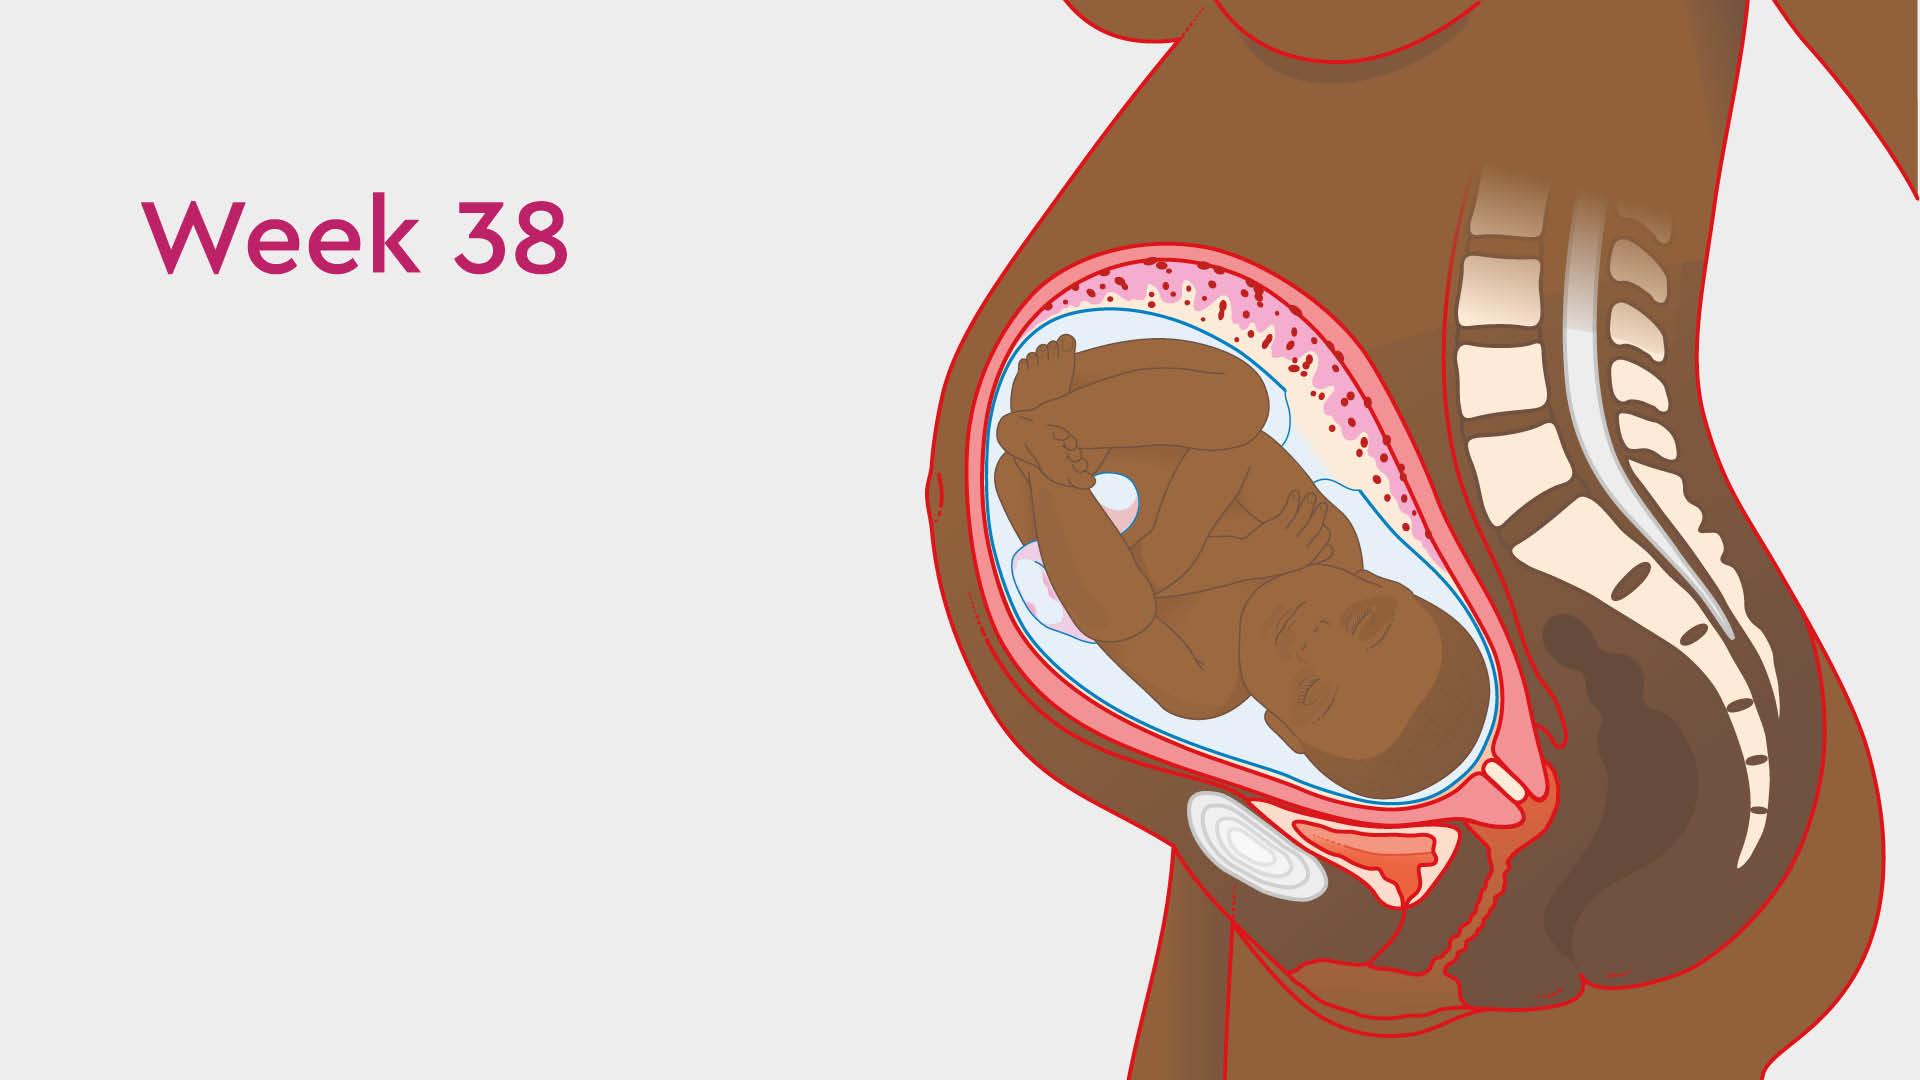 39 Weeks Pregnant: Baby Development, Symptoms & Signs